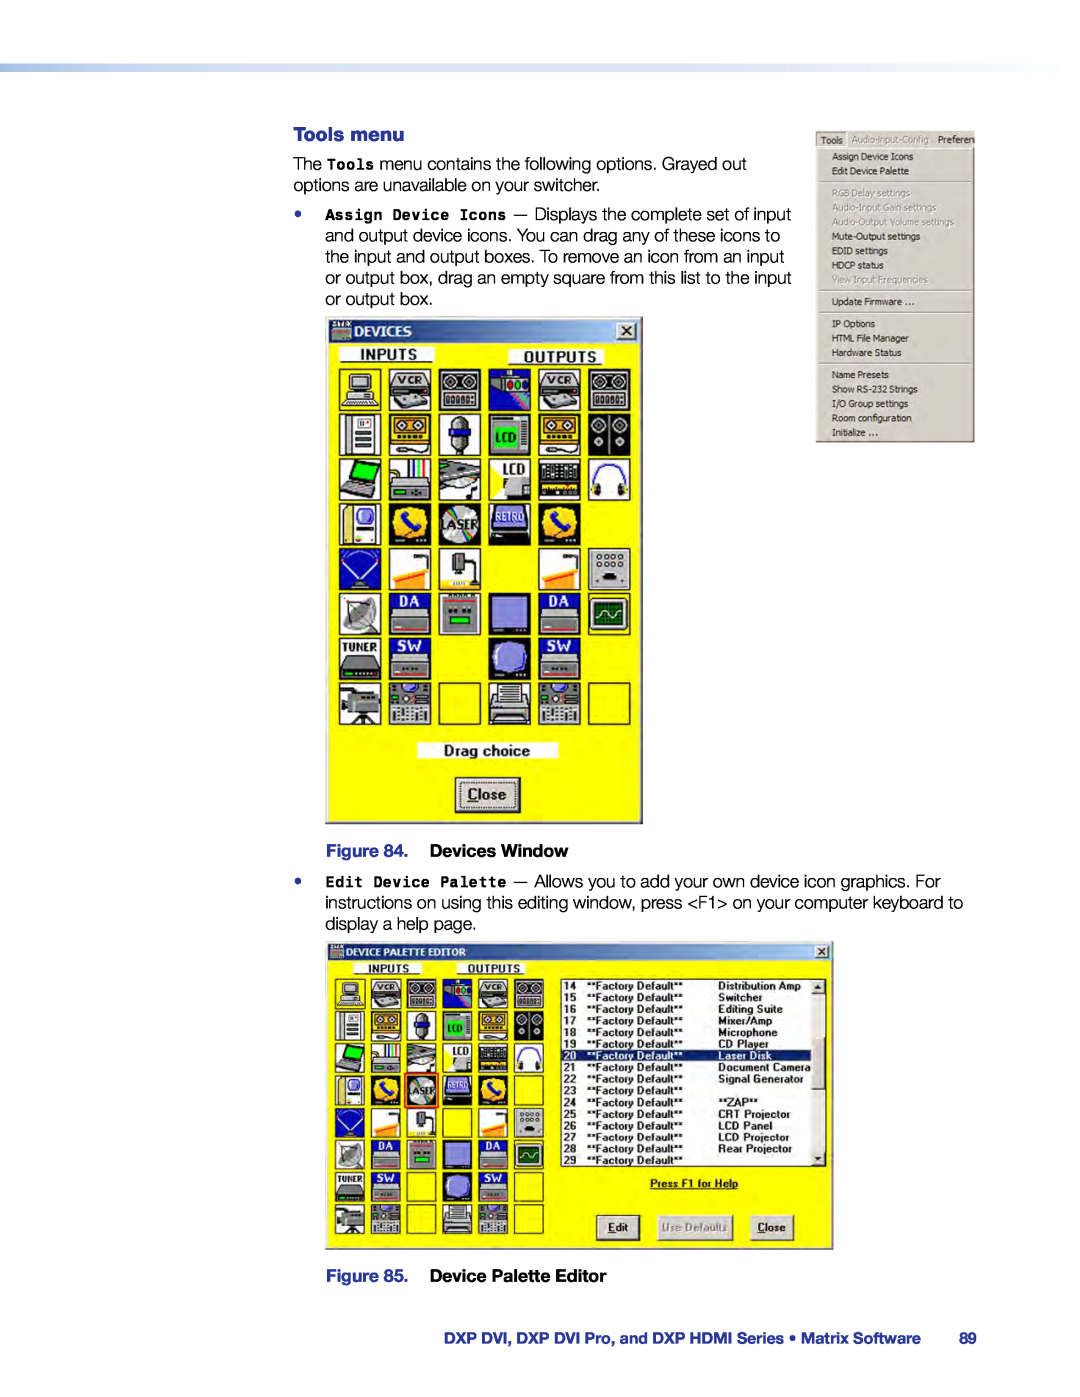 Extron electronic DXP DVI PRO manual Tools menu, Devices Window, Device Palette Editor 